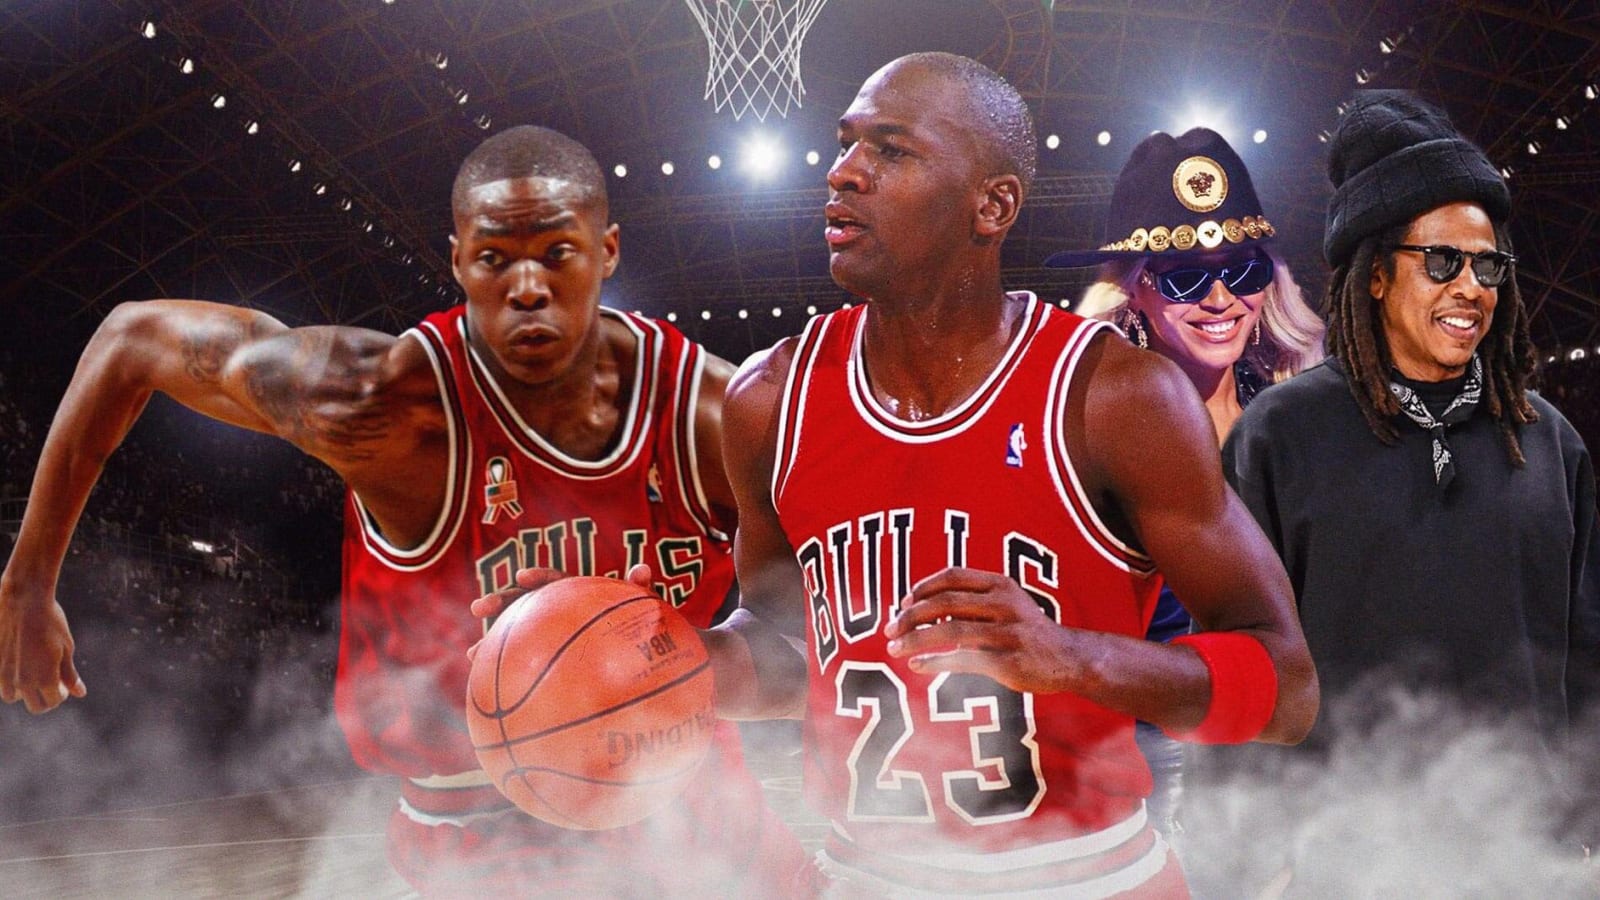 Jamal Crawford recalls Bulls star Michael Jordan’s legendary pickup games featuring Beyonce, Jay-Z courtside